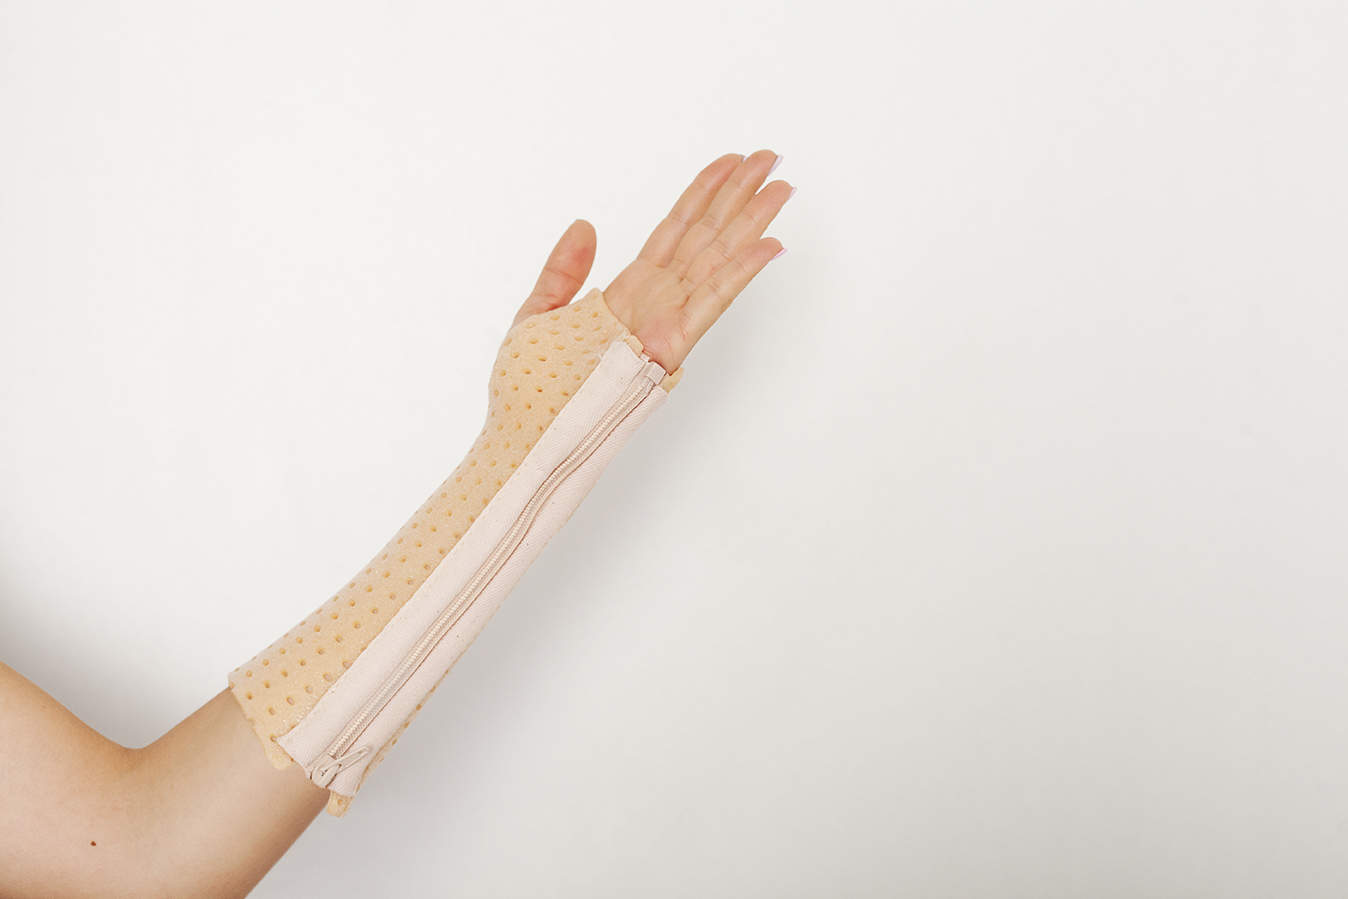 Wrist joint orthosis